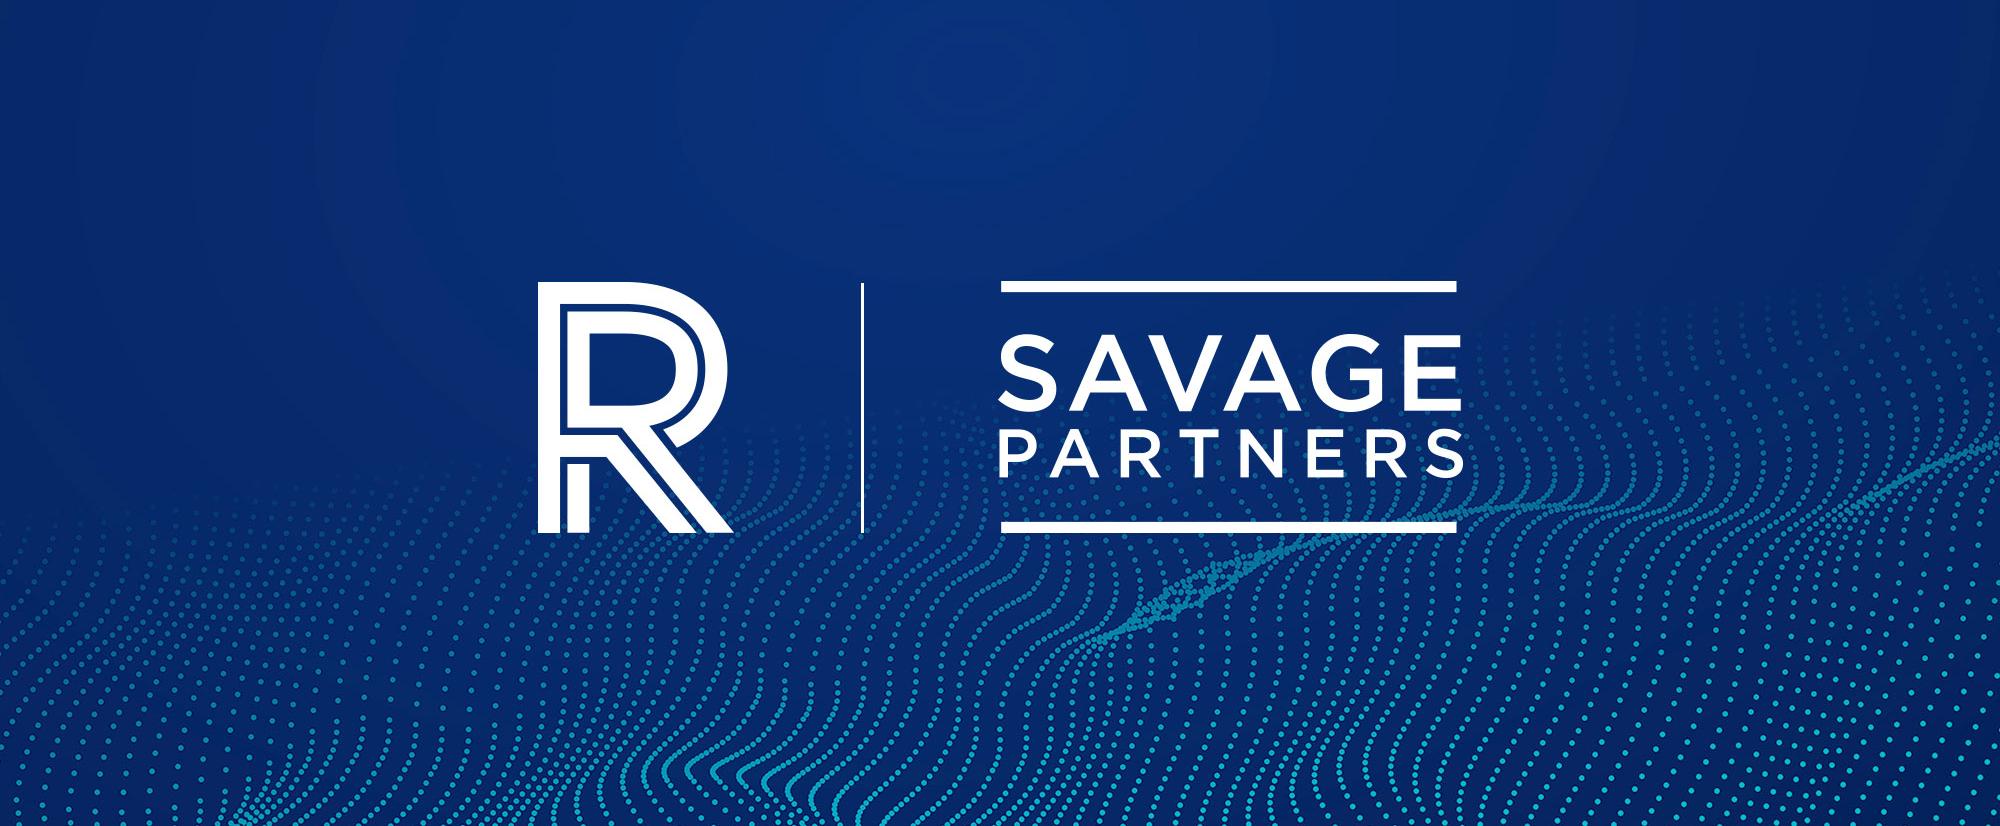 savage-partners-banner.jpg